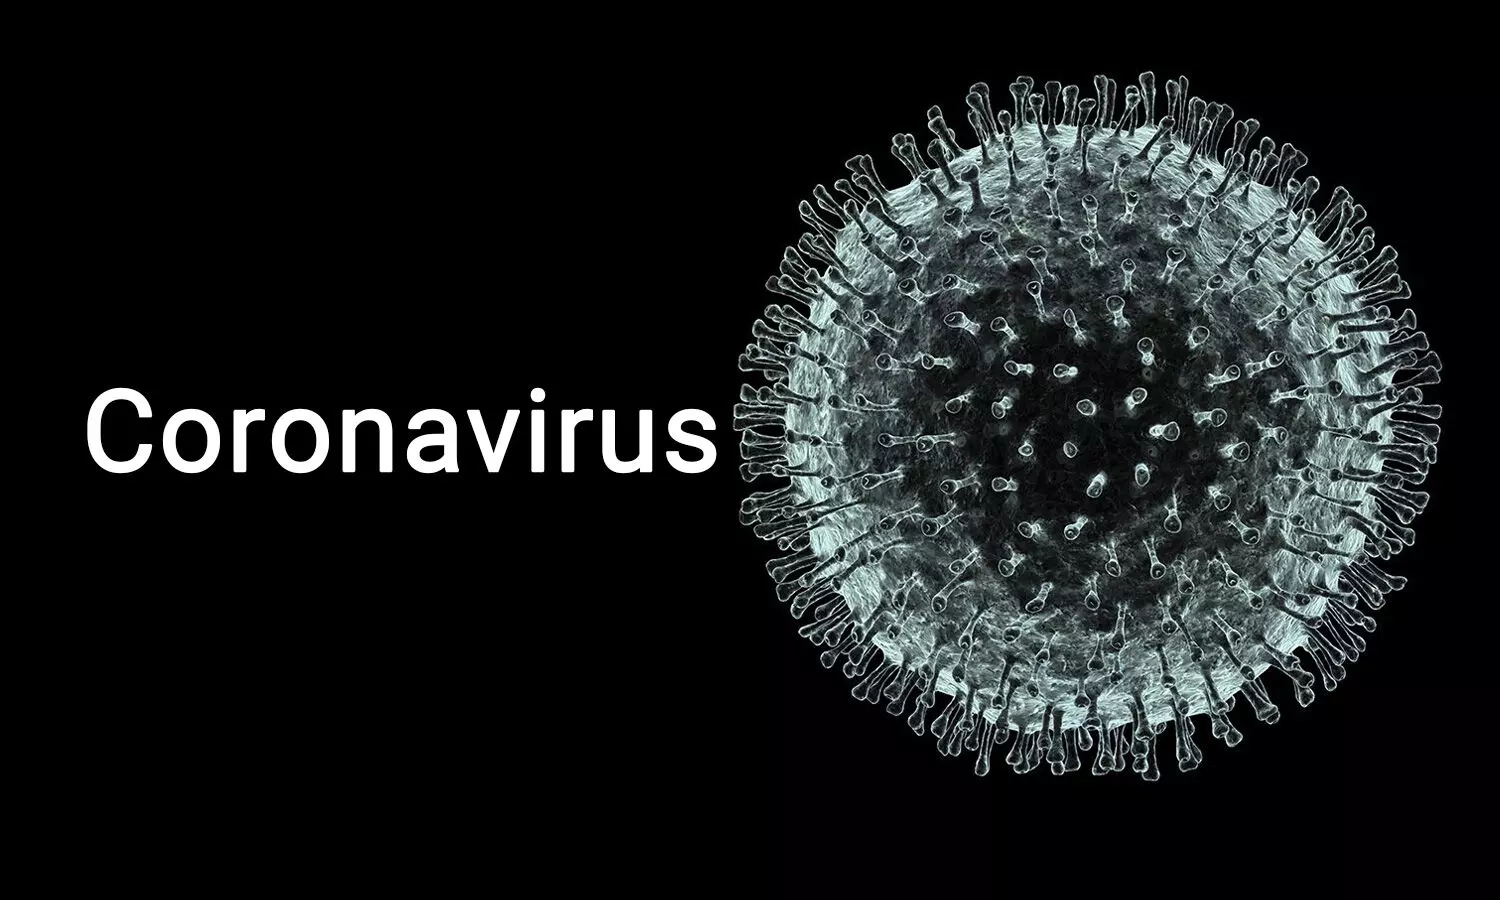 No positive case of coronavirus so far, says Andhra pradesh